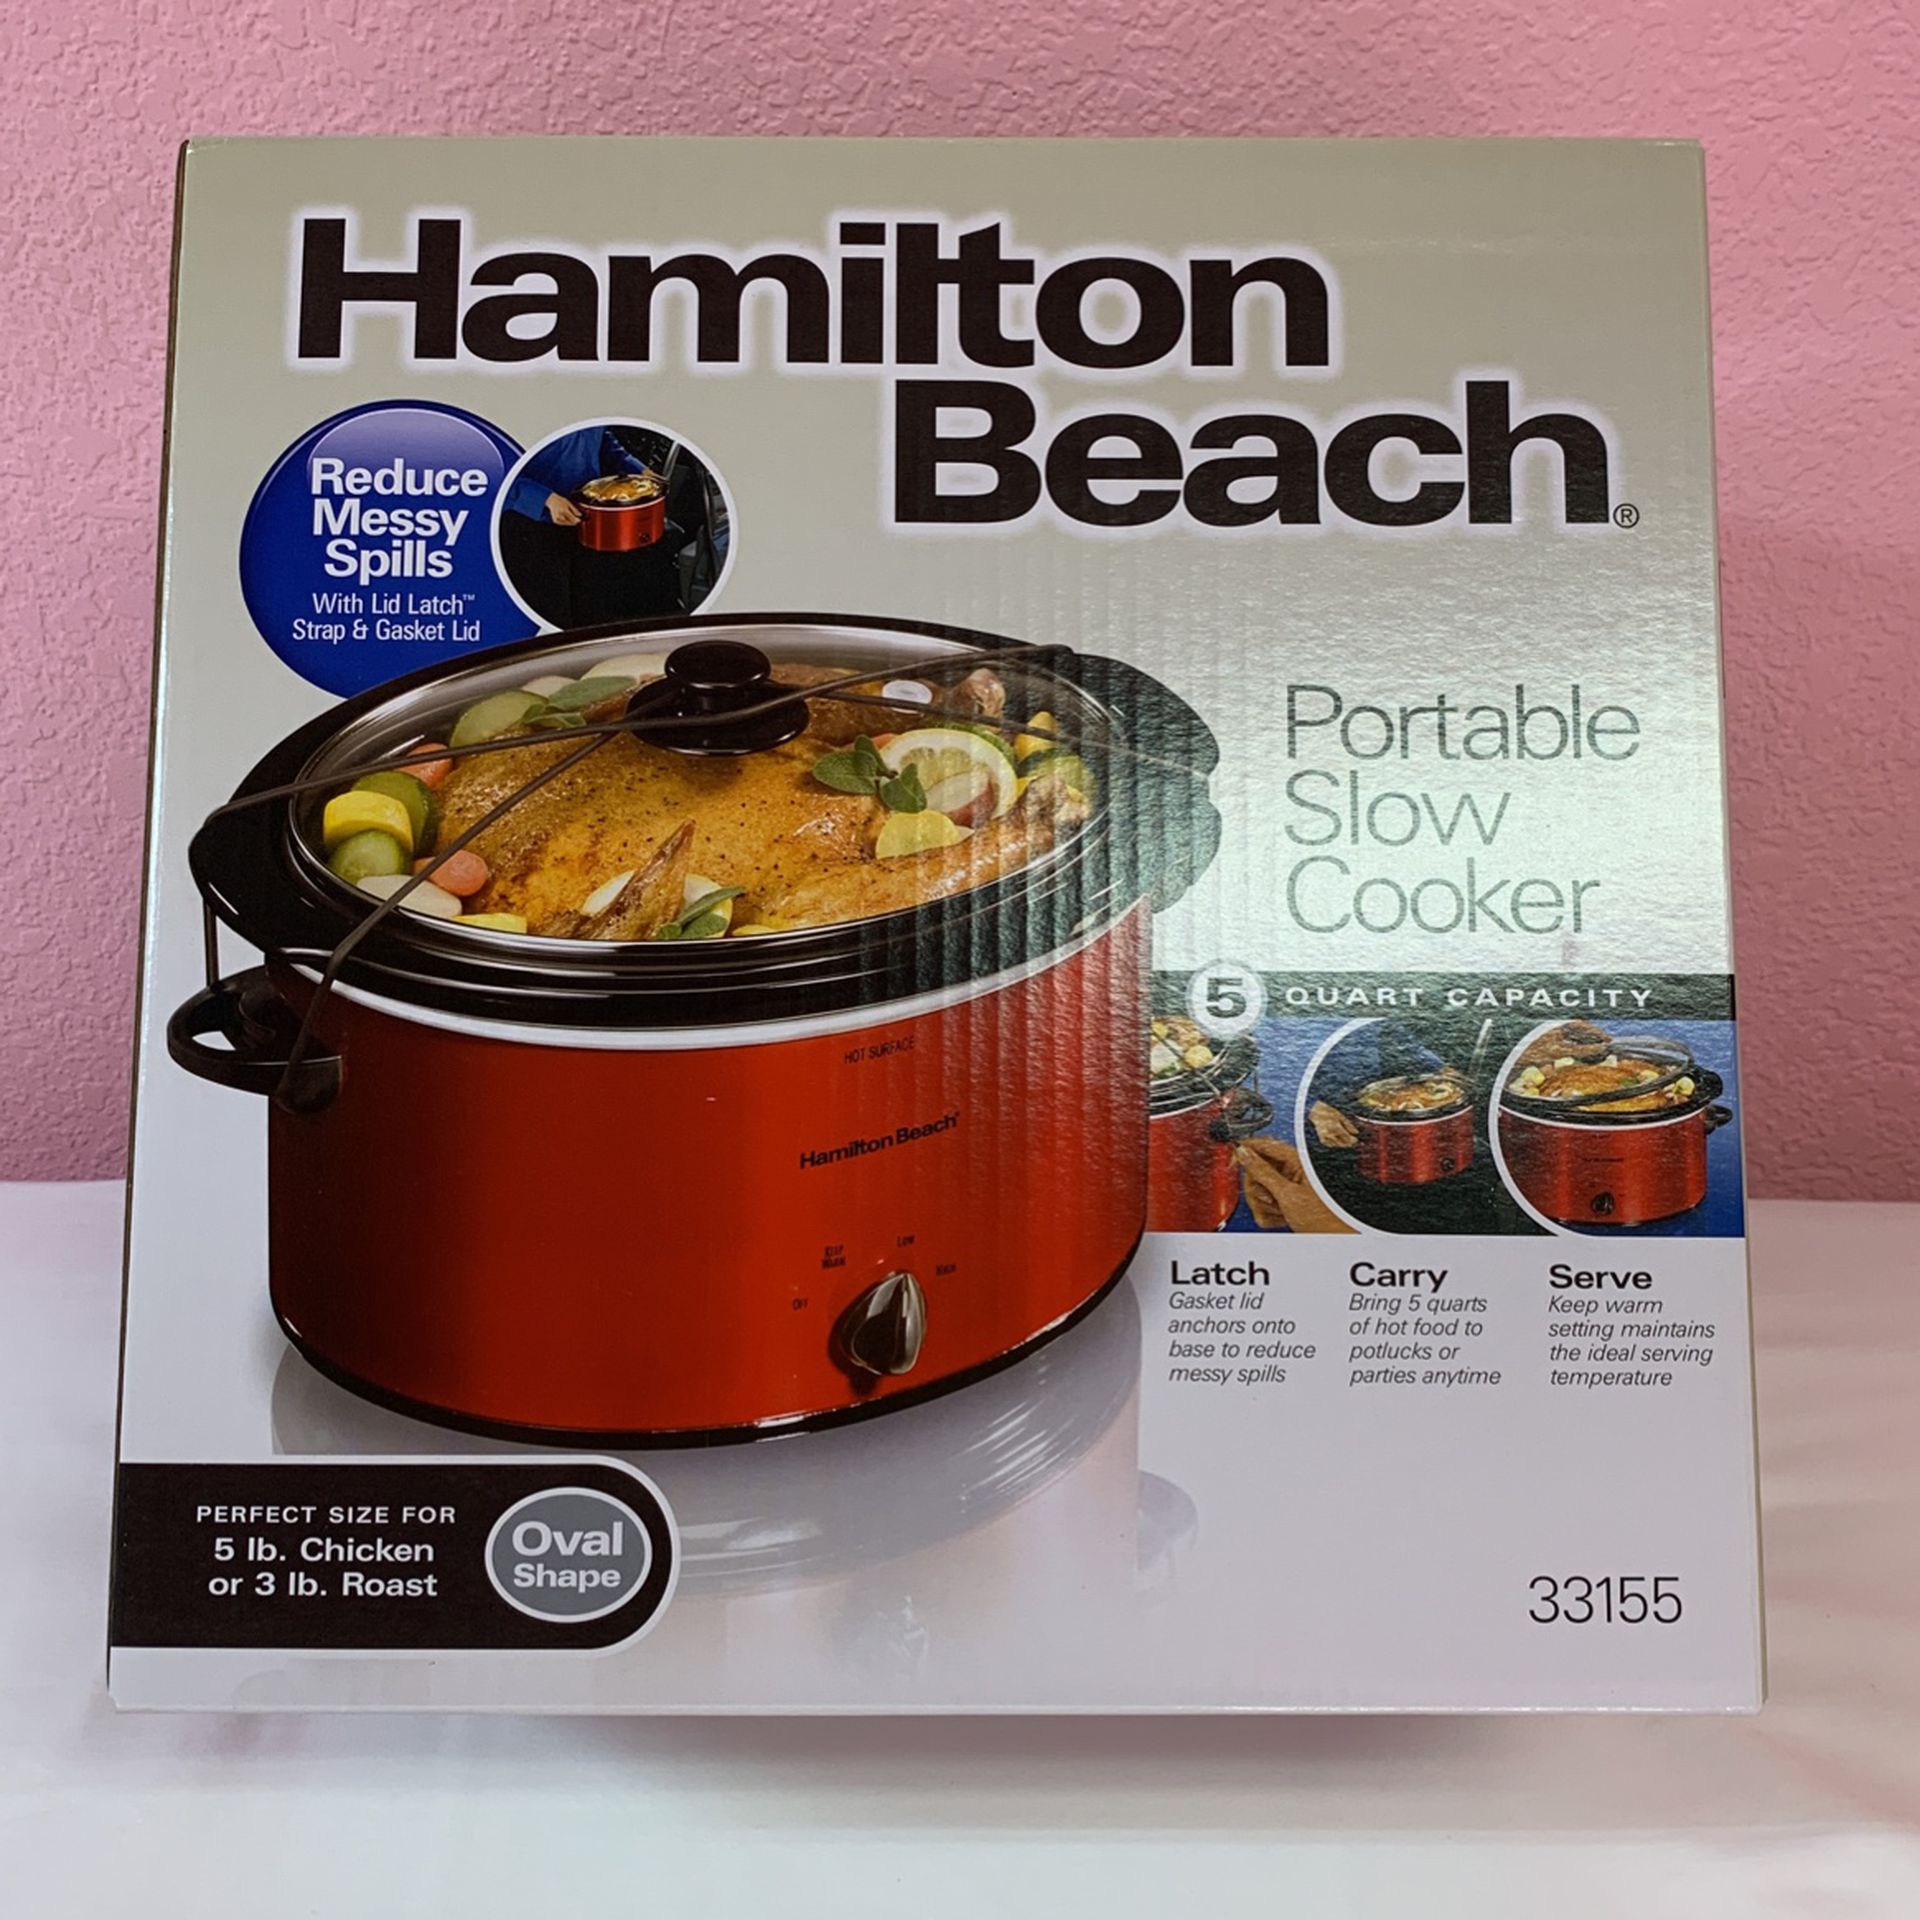 Hamilton Beach 5 Quart Portable Slow Cooker